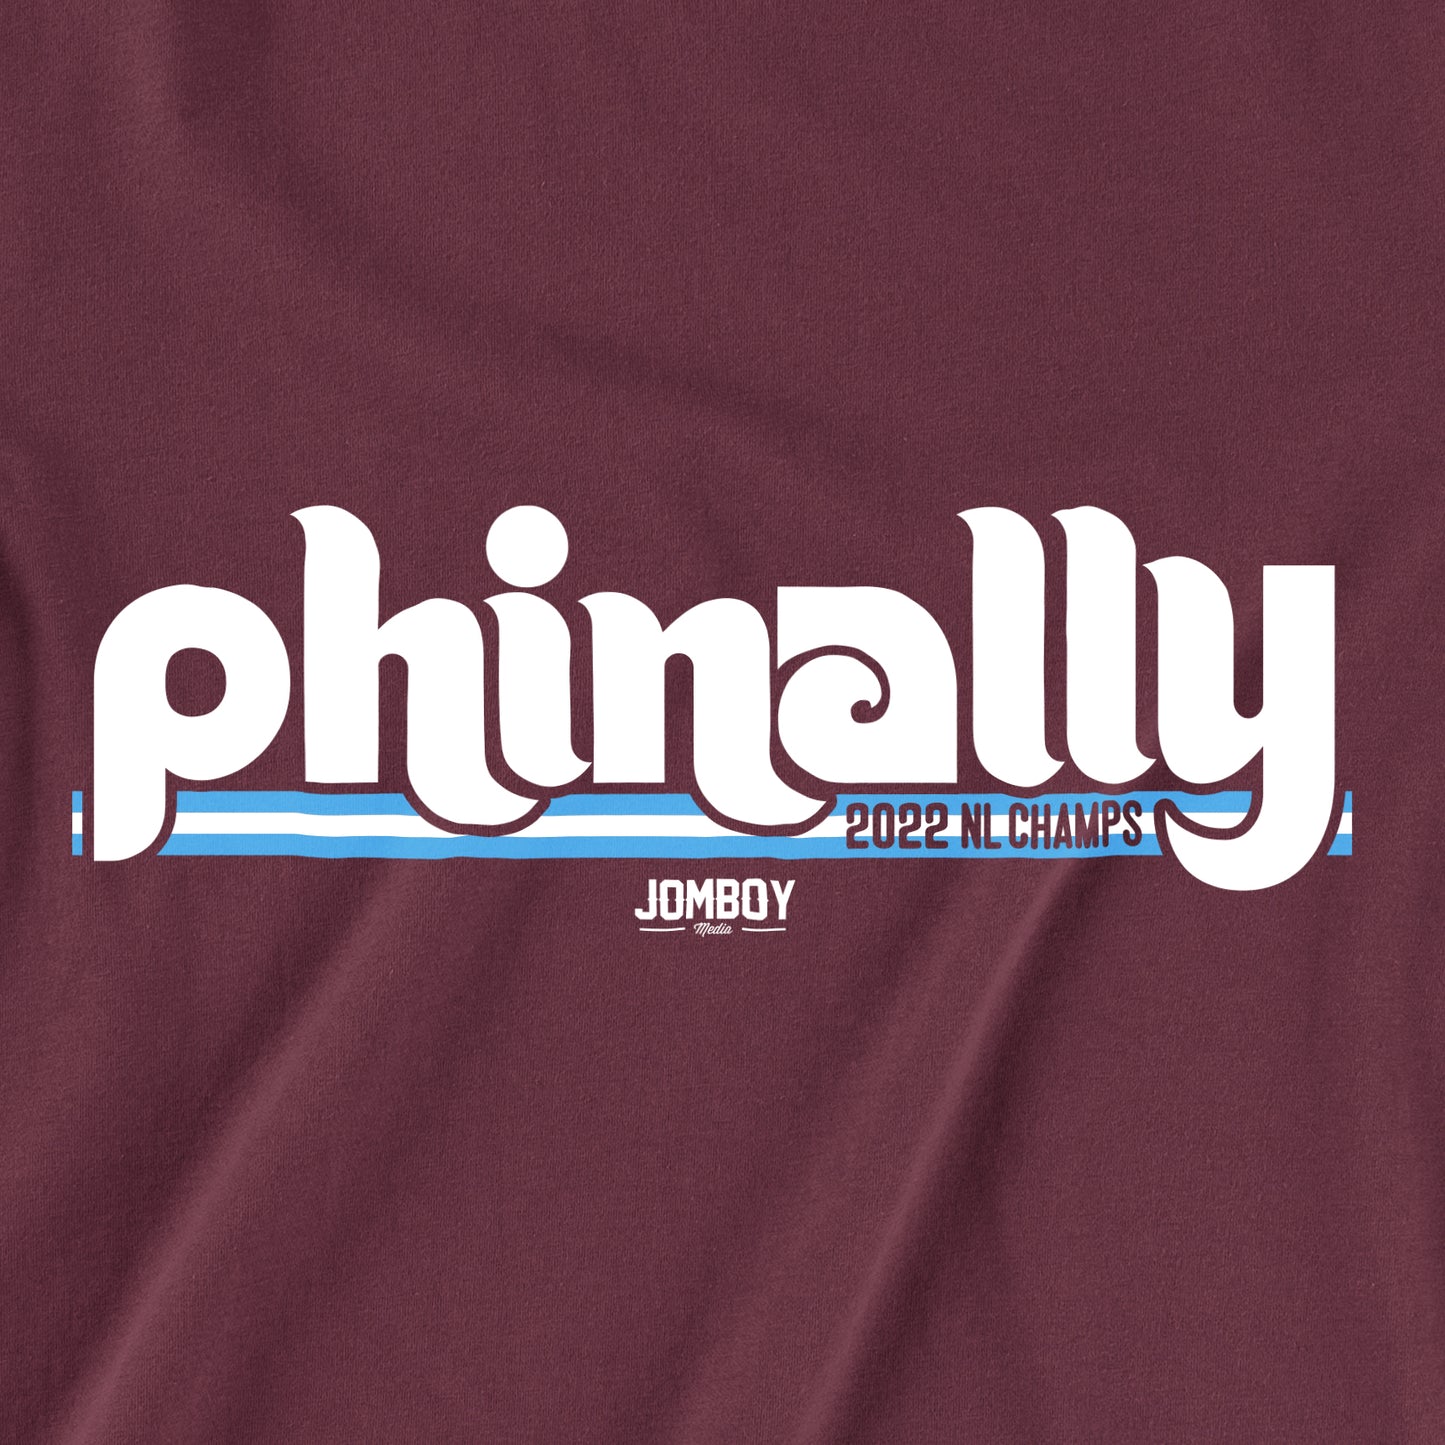 Phinally | T-Shirt